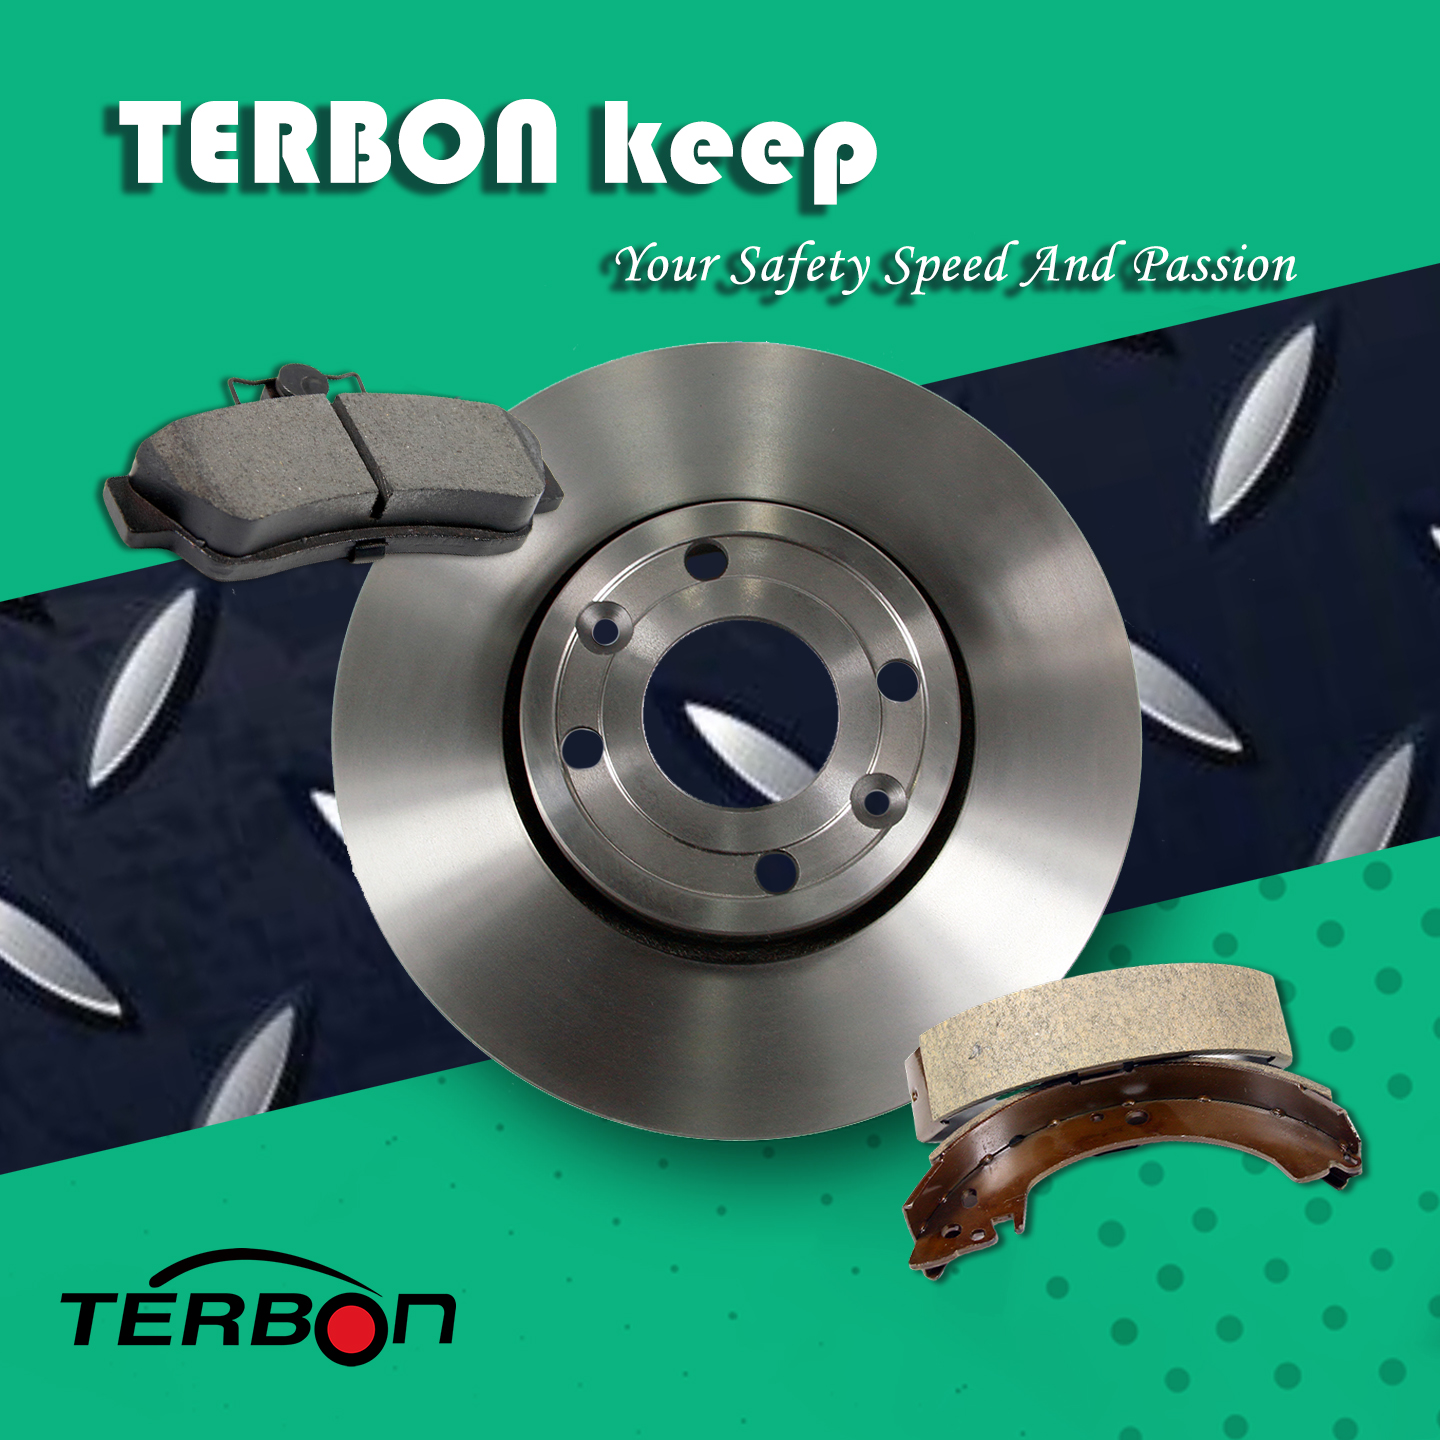 Comprehensive service and excellent quality: TERBON leads the aftermarket automotive parts market